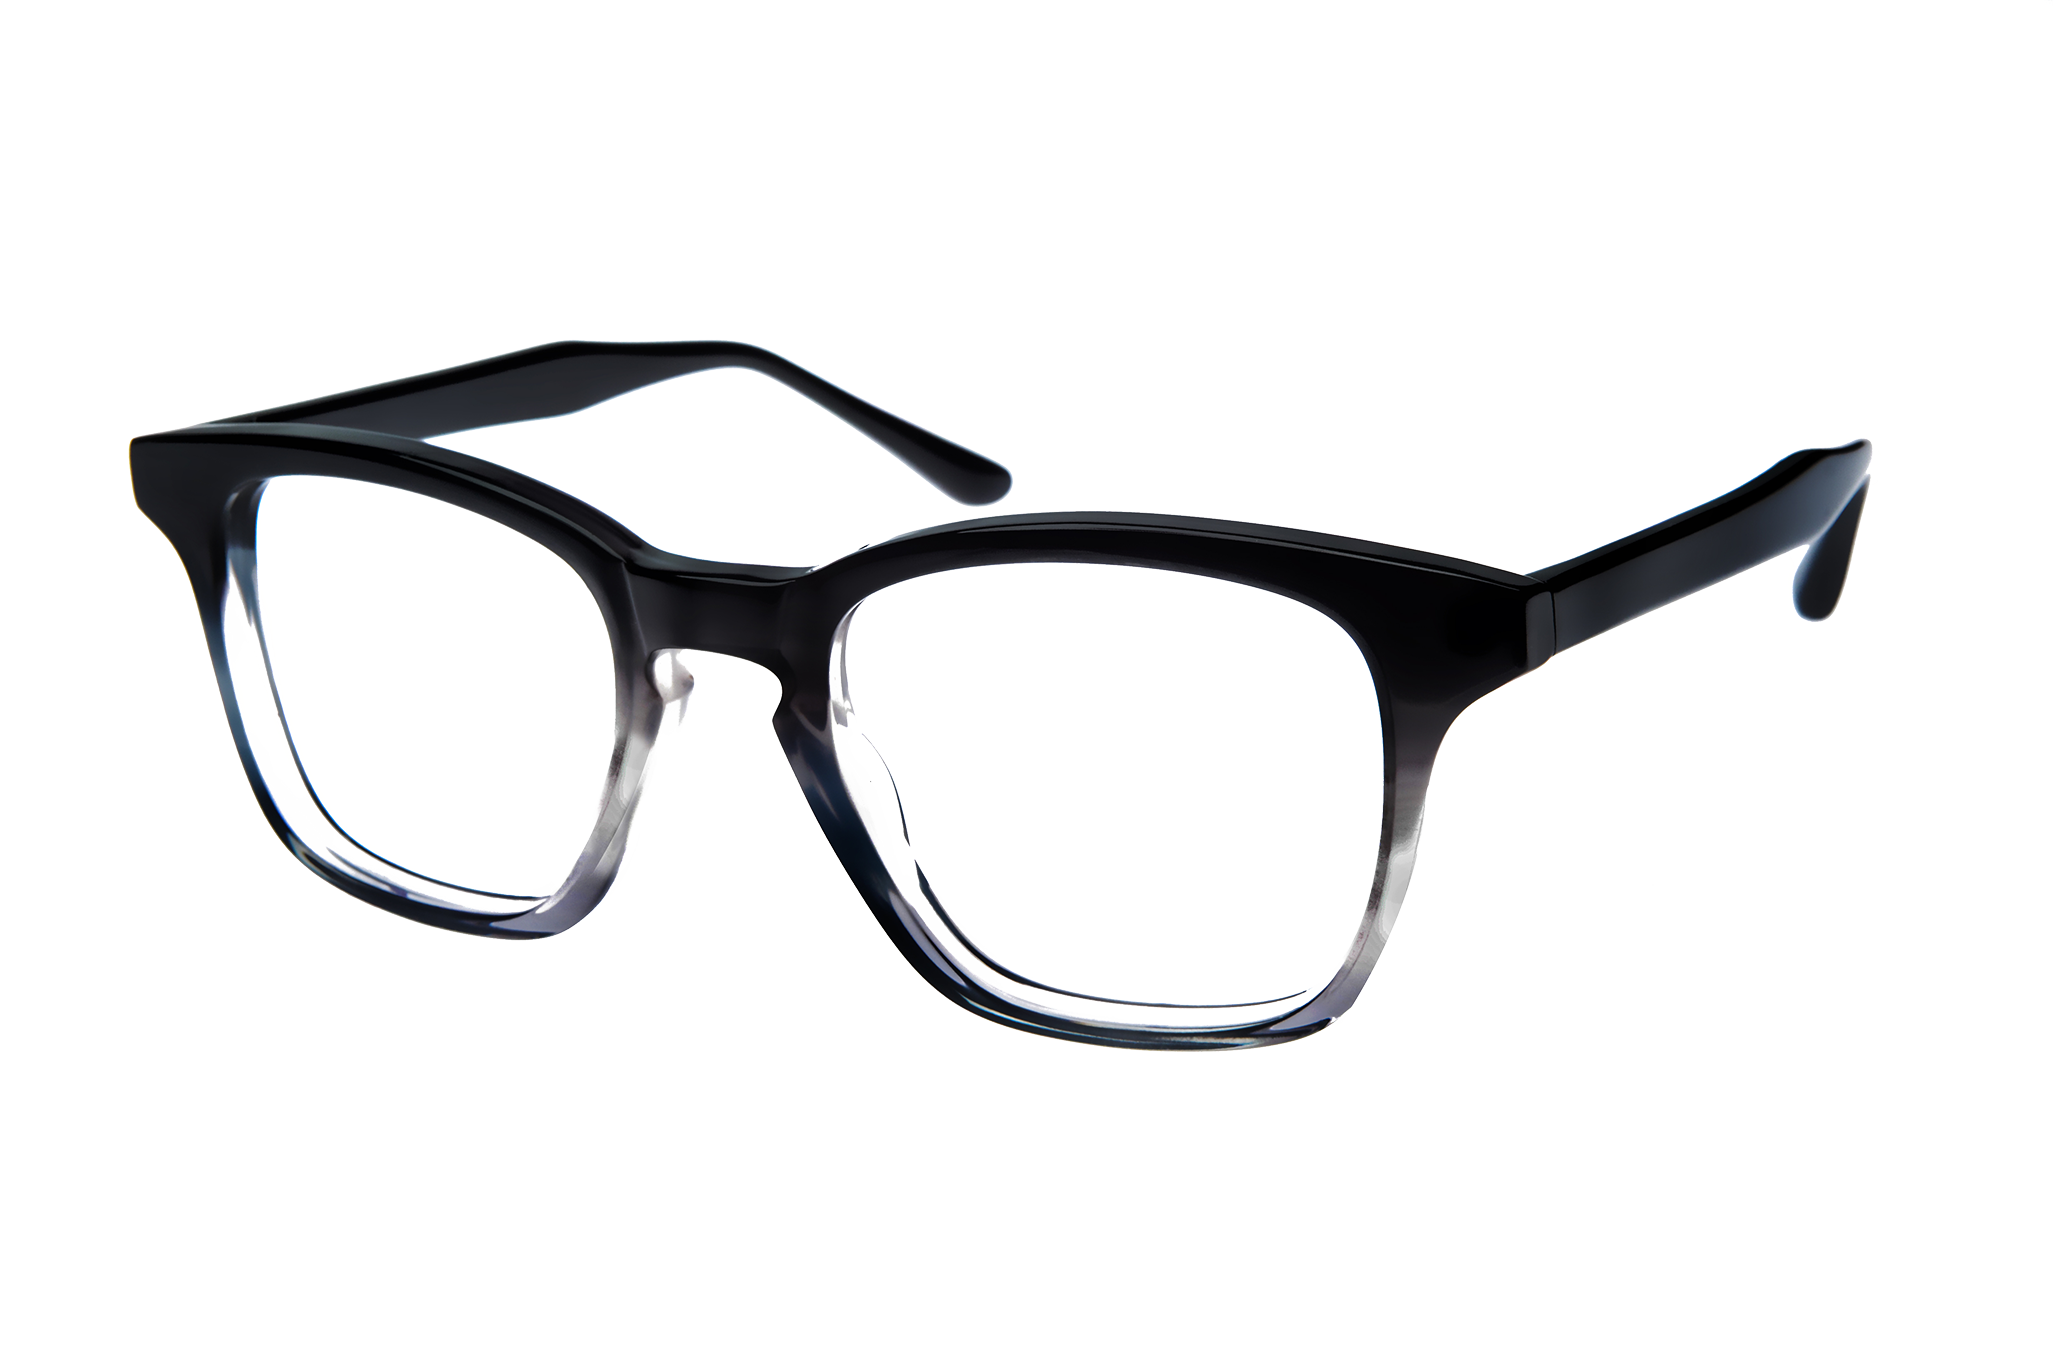 Glasses Png Image - Glasses, Transparent background PNG HD thumbnail